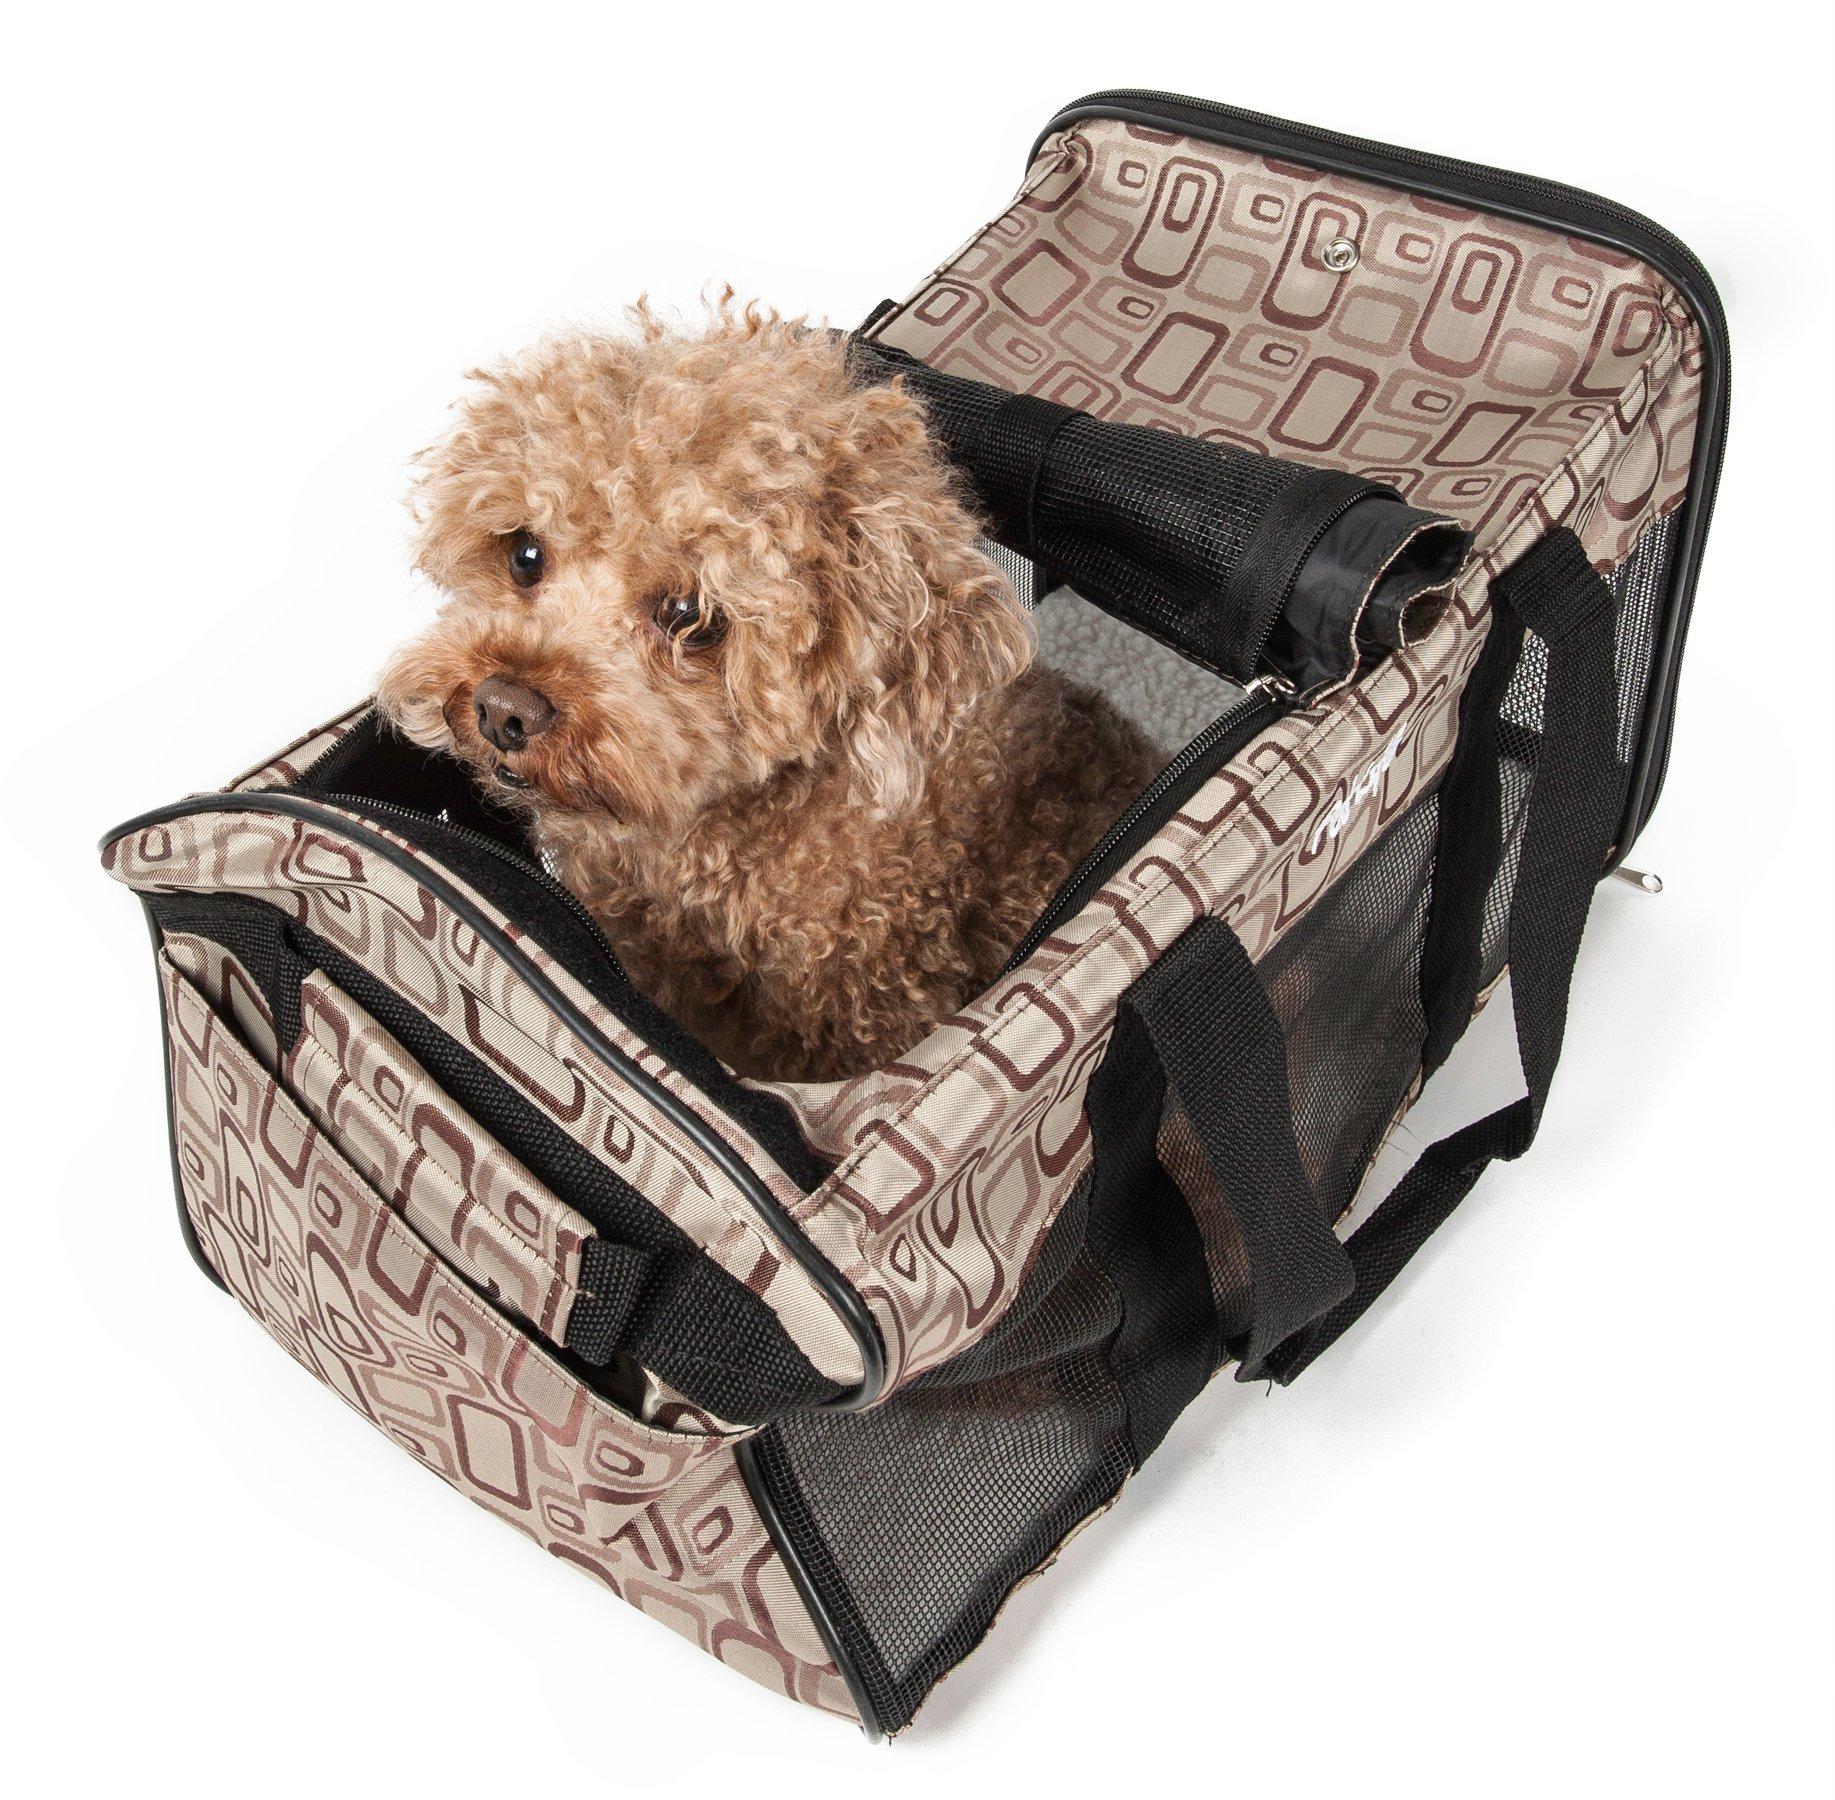 PET LIFE Airline Approved Ultra-Comfort Designer Collapsible Travel Fashion Pet Dog Carrier, Medium, Plaid Design